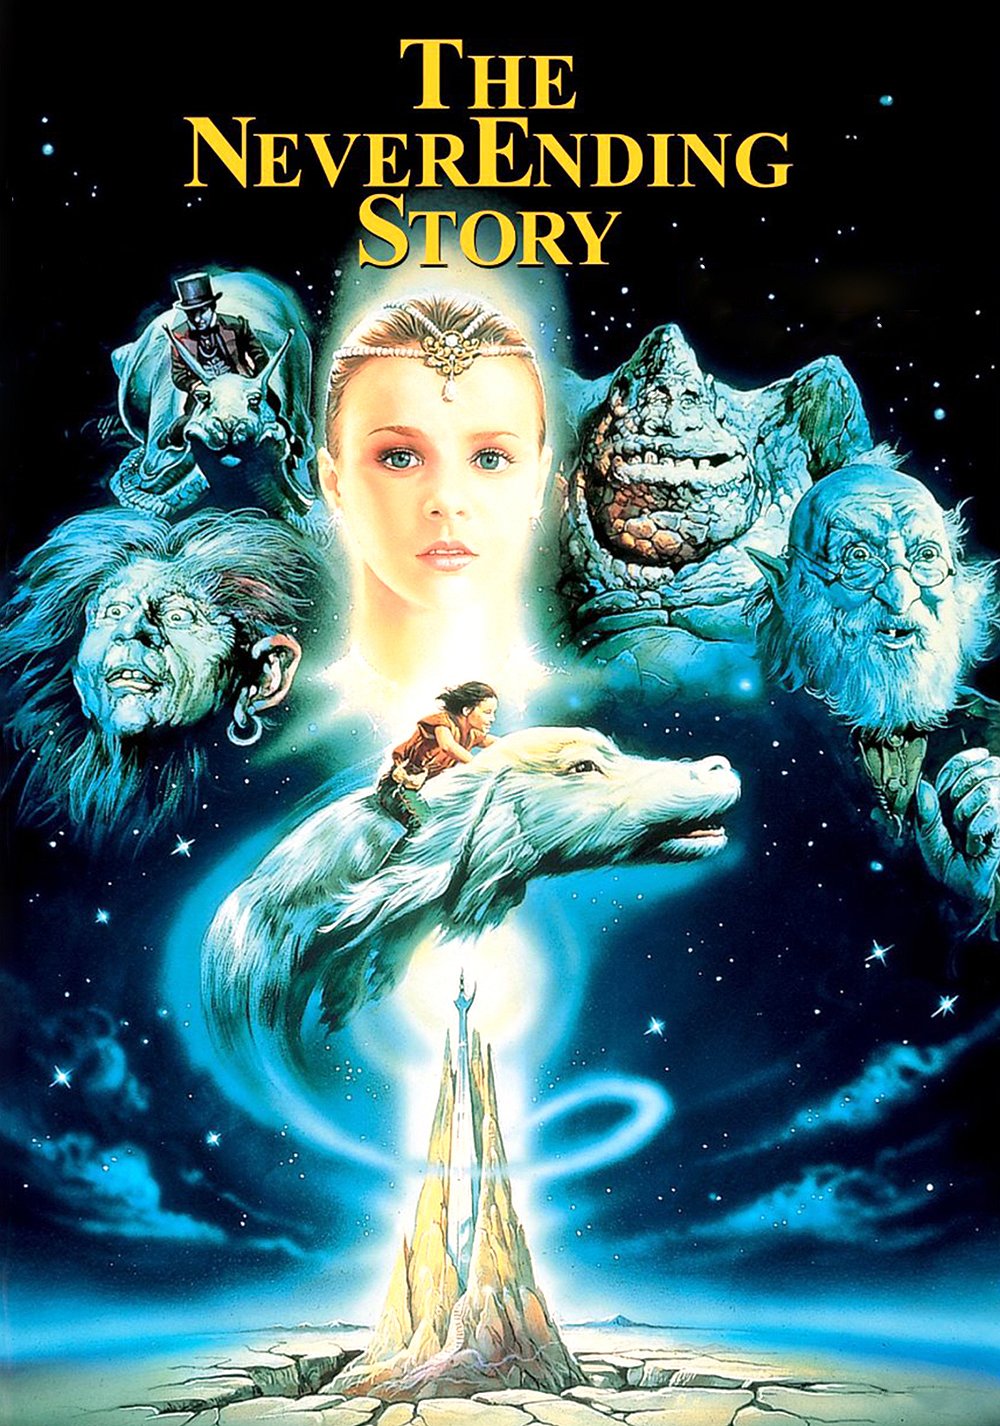 The NeverEnding Story (1984) Movie Poster Google image from https://fanart.tv/movie/34584/the-neverending-story/